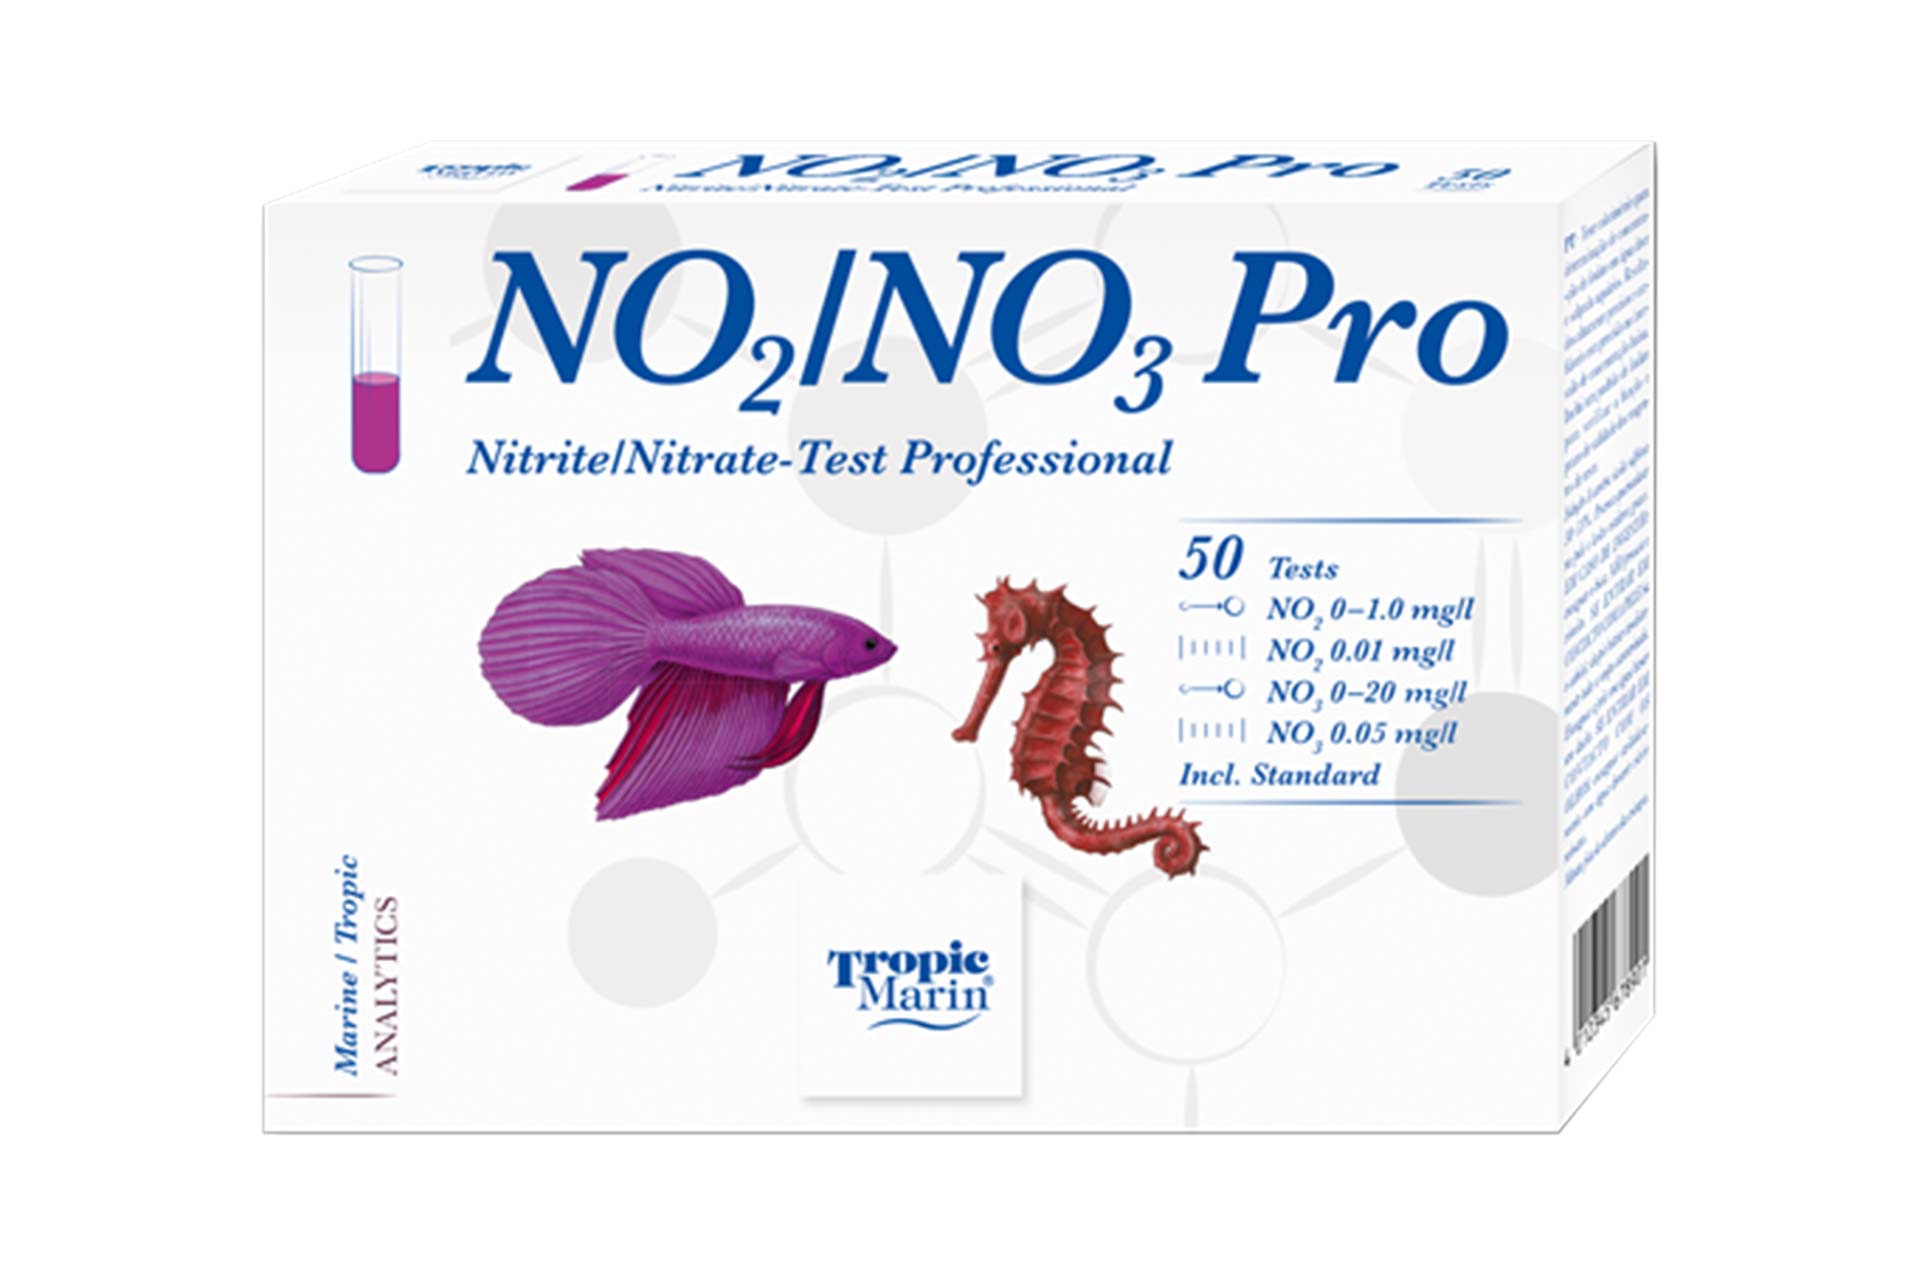 Tropic Marin NO2/NO3 Pro - Nitrit/Nitrat-Test Professional - buy online